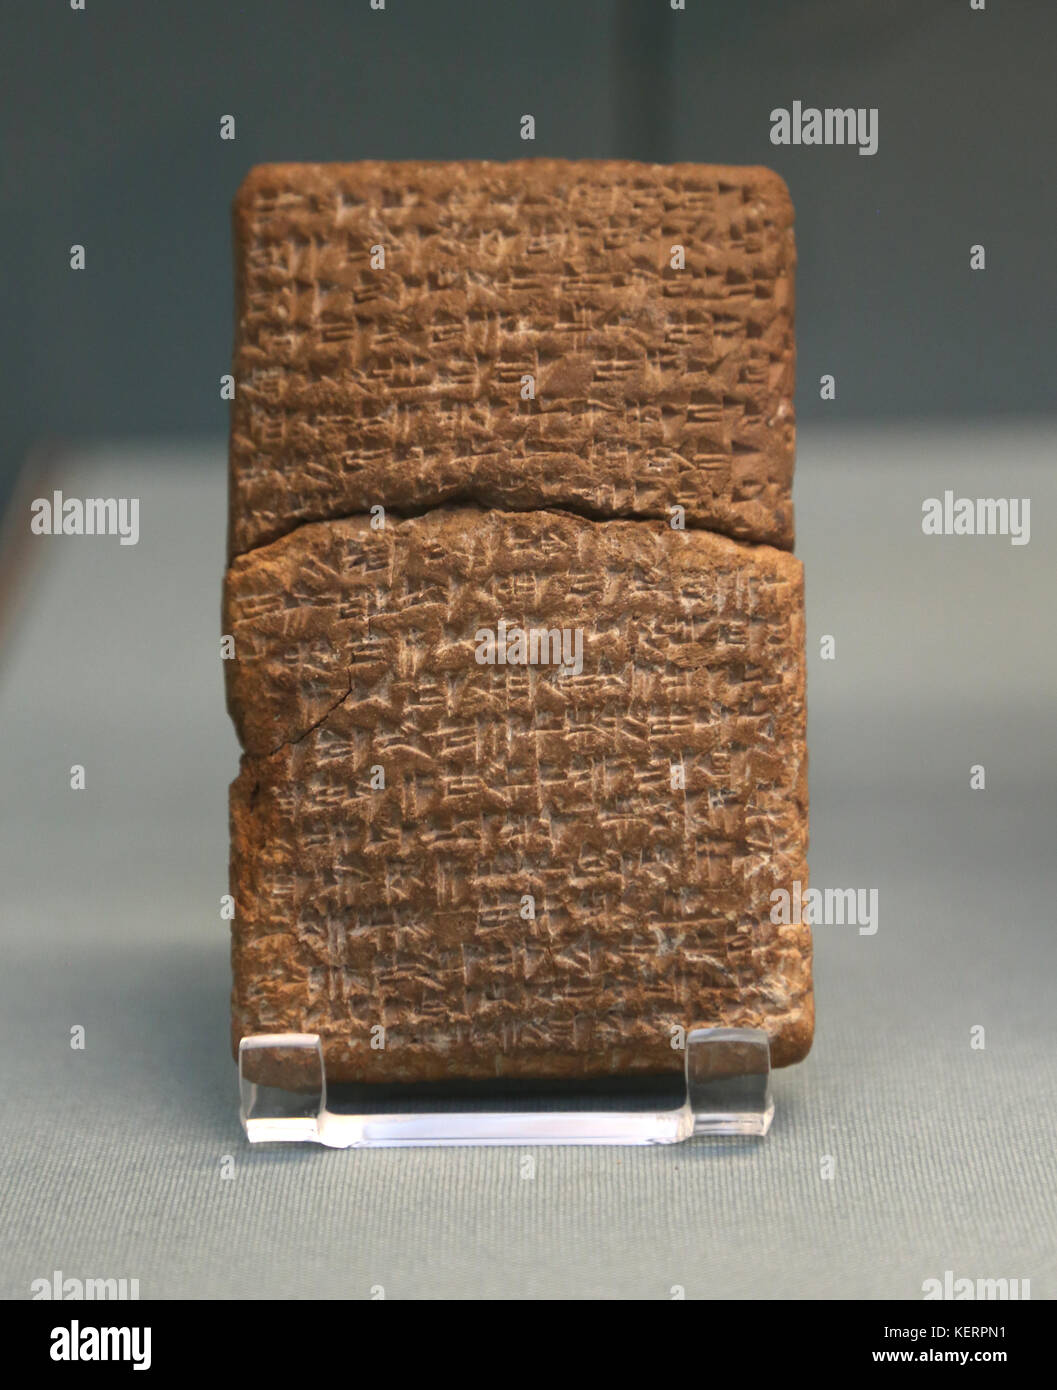 Treaty concerning fugitive slaves. 1480 BC, Hittite. From Atchana. South-eastern Turkey. Clay tablet. British Museum. London. GBR. Stock Photo